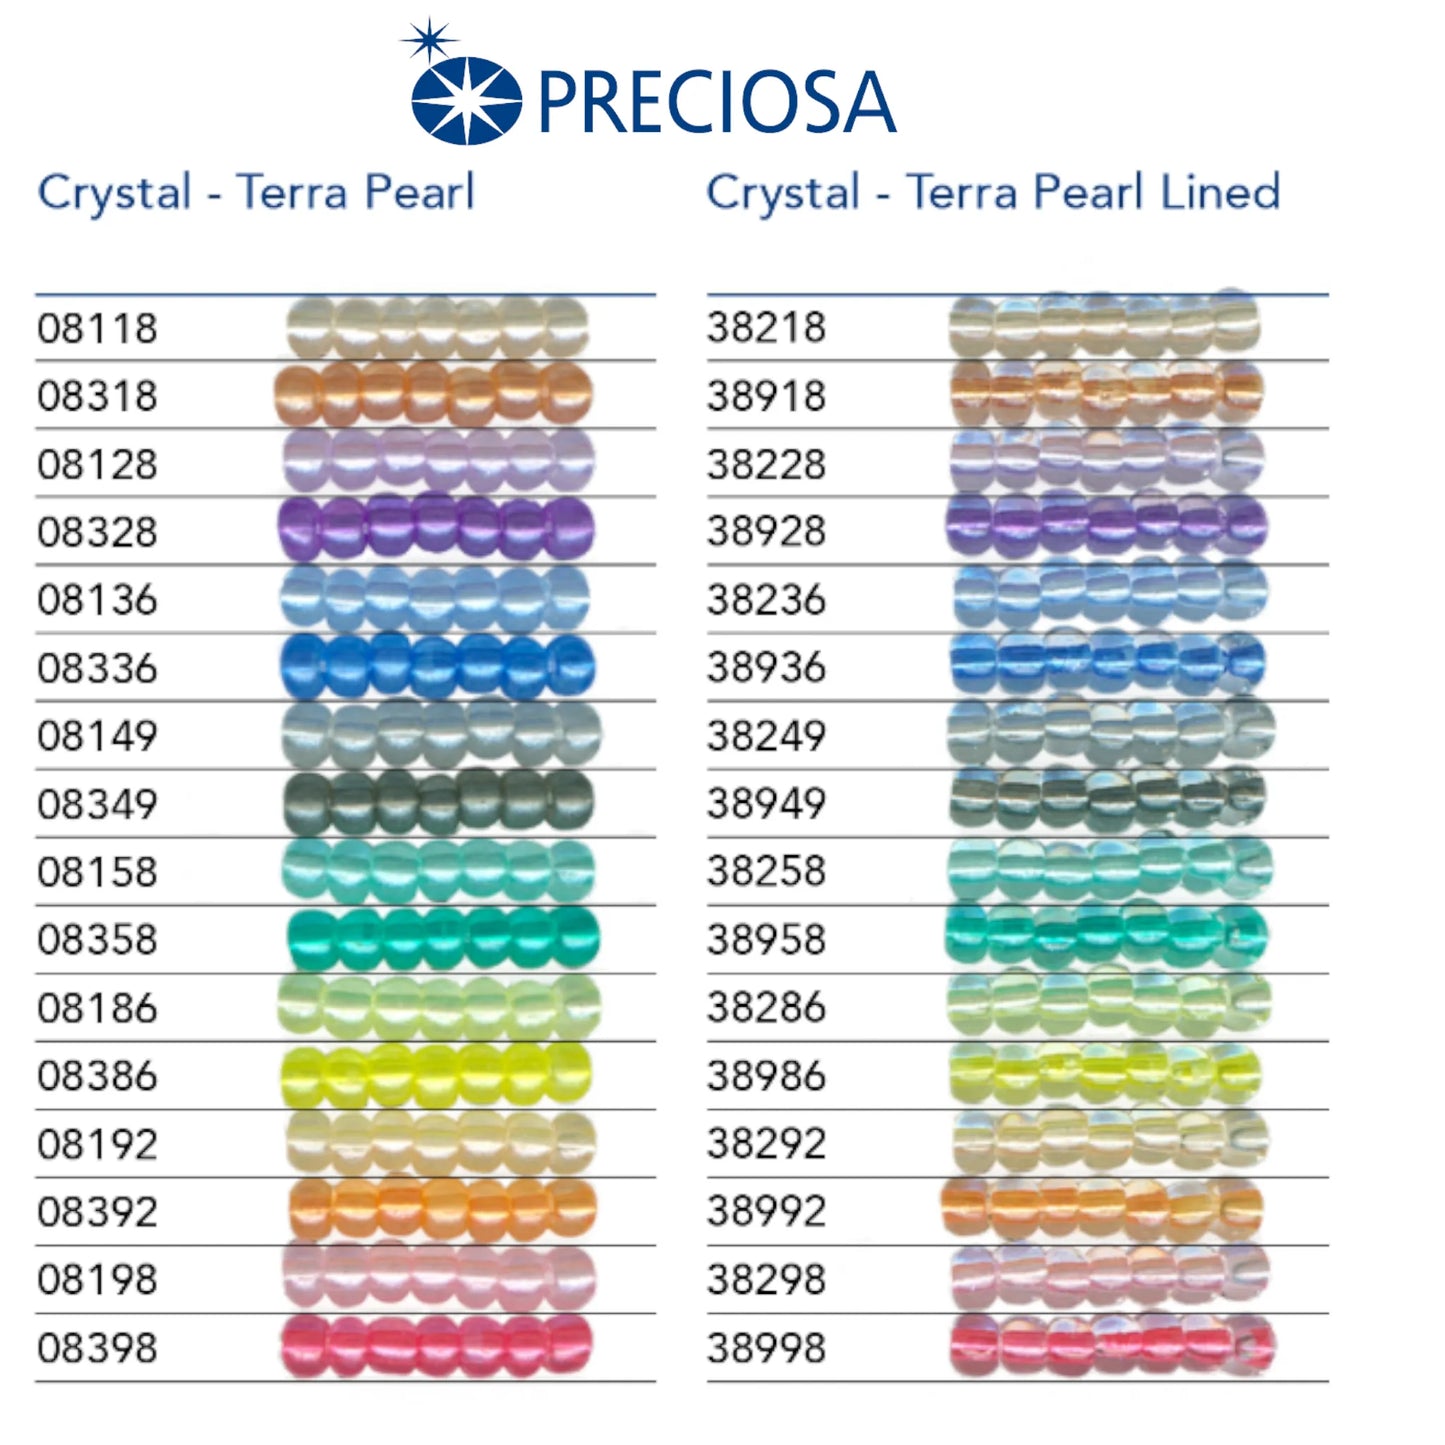 08158 Tschechische Rocailles PRECIOSA Rocailles 10/0 türkis. Kristall - Terra Pearl.